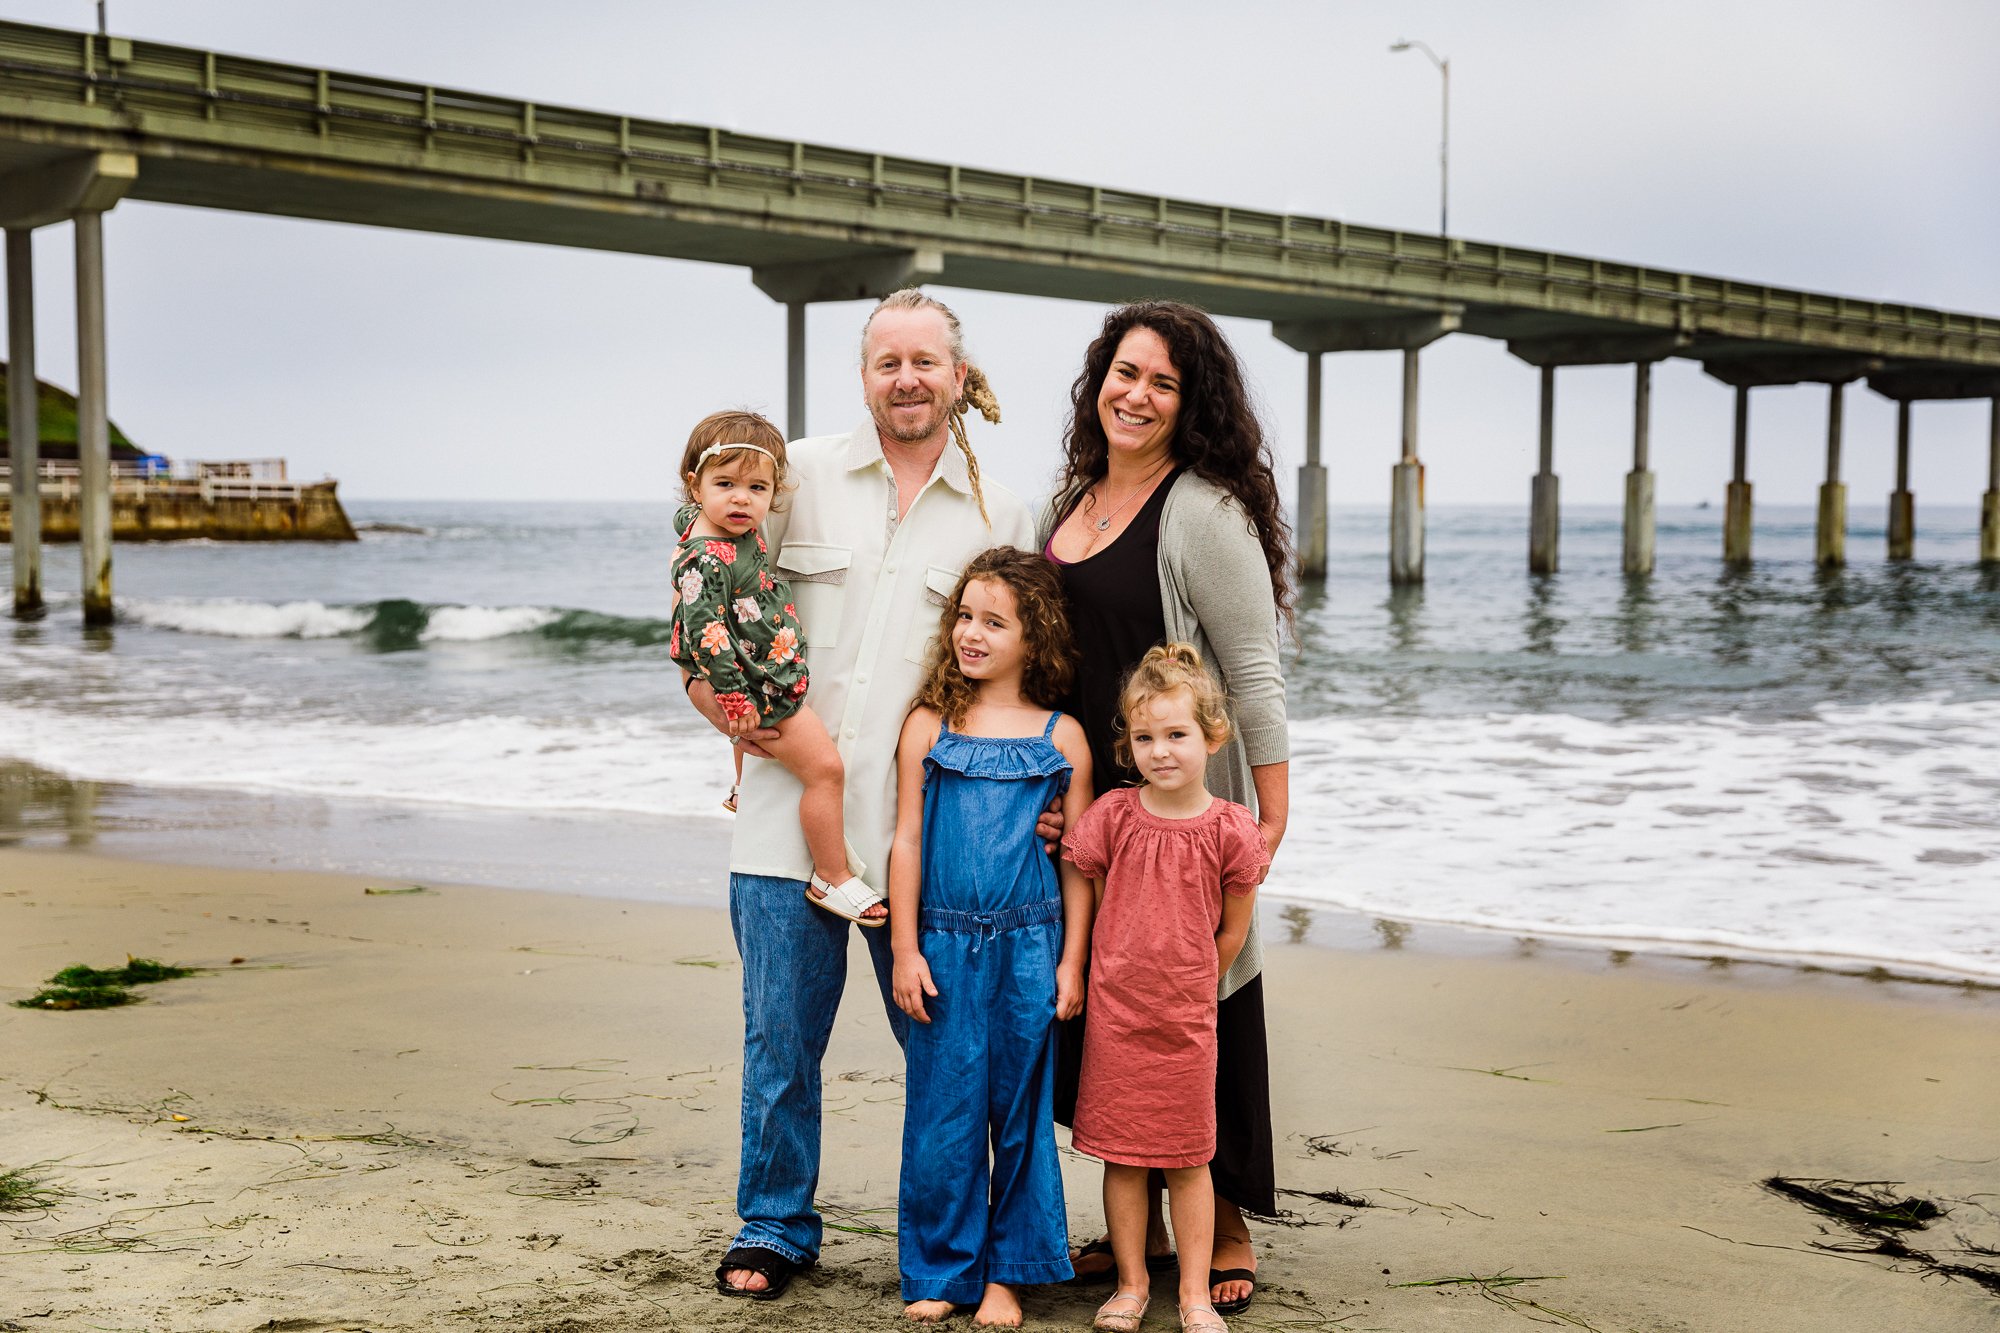 Family Portrait Photography Session at Ocean Beach Pier, San Diego, California-66.jpg